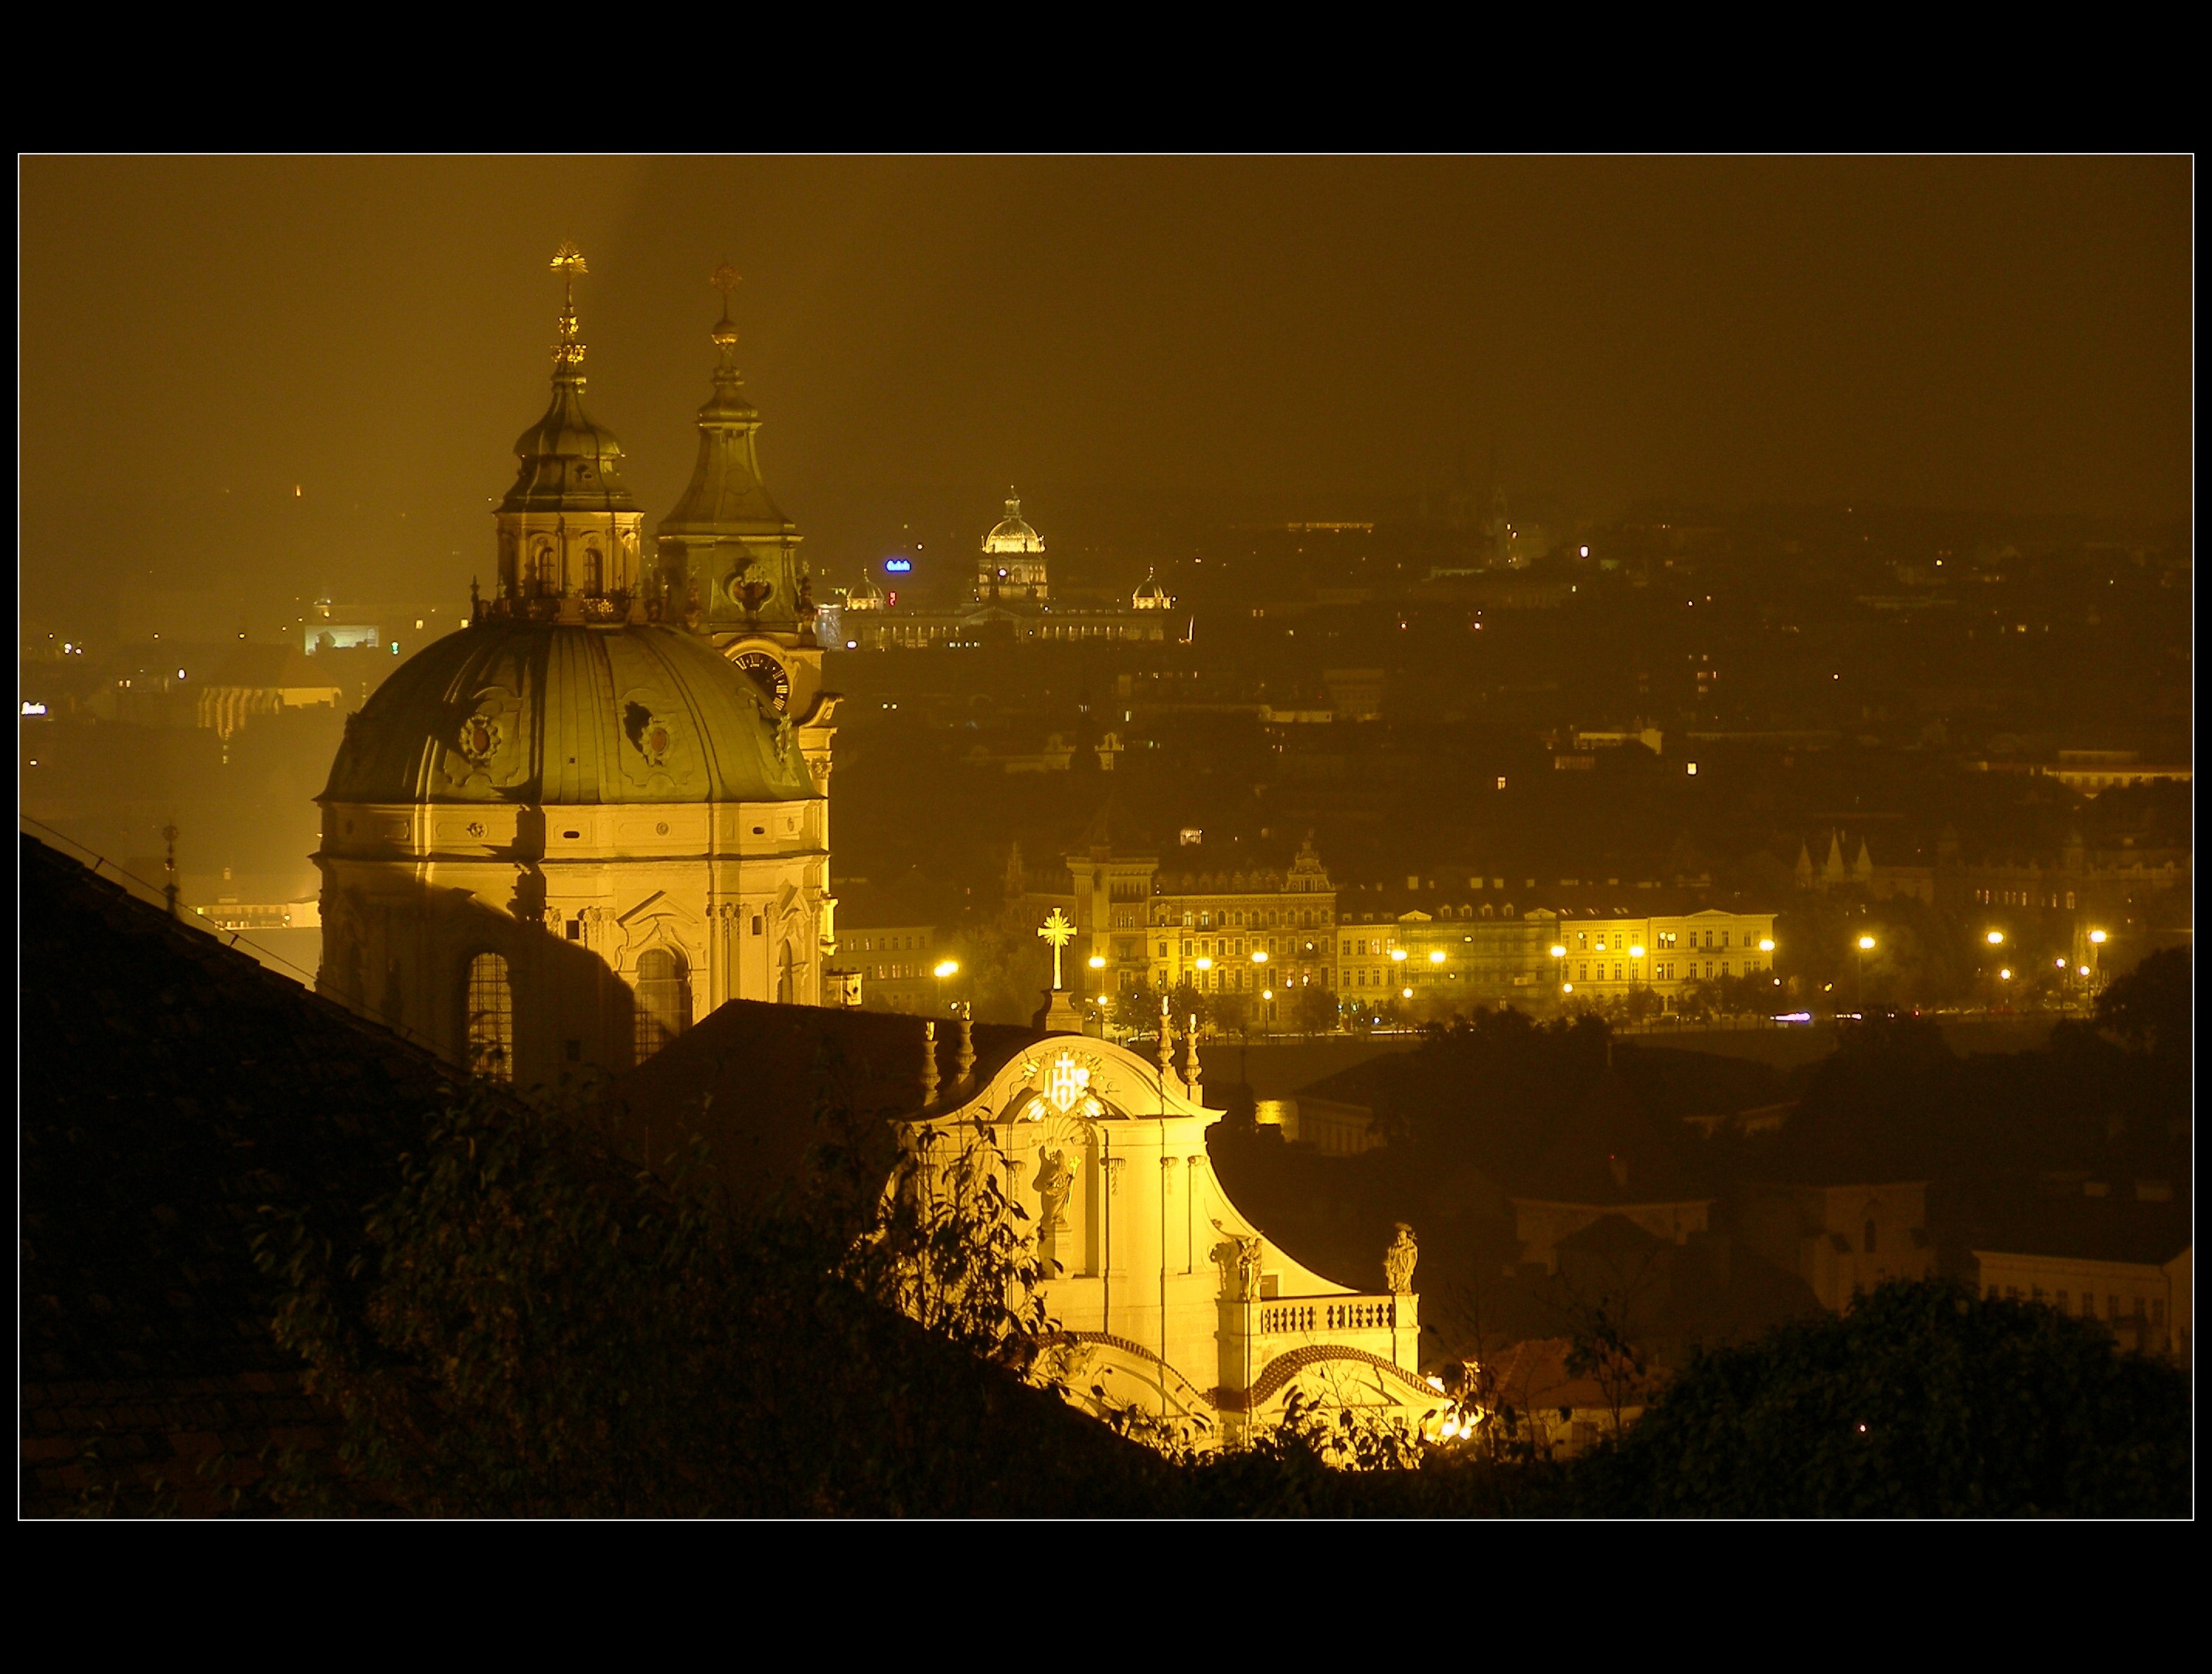 Night in Prague